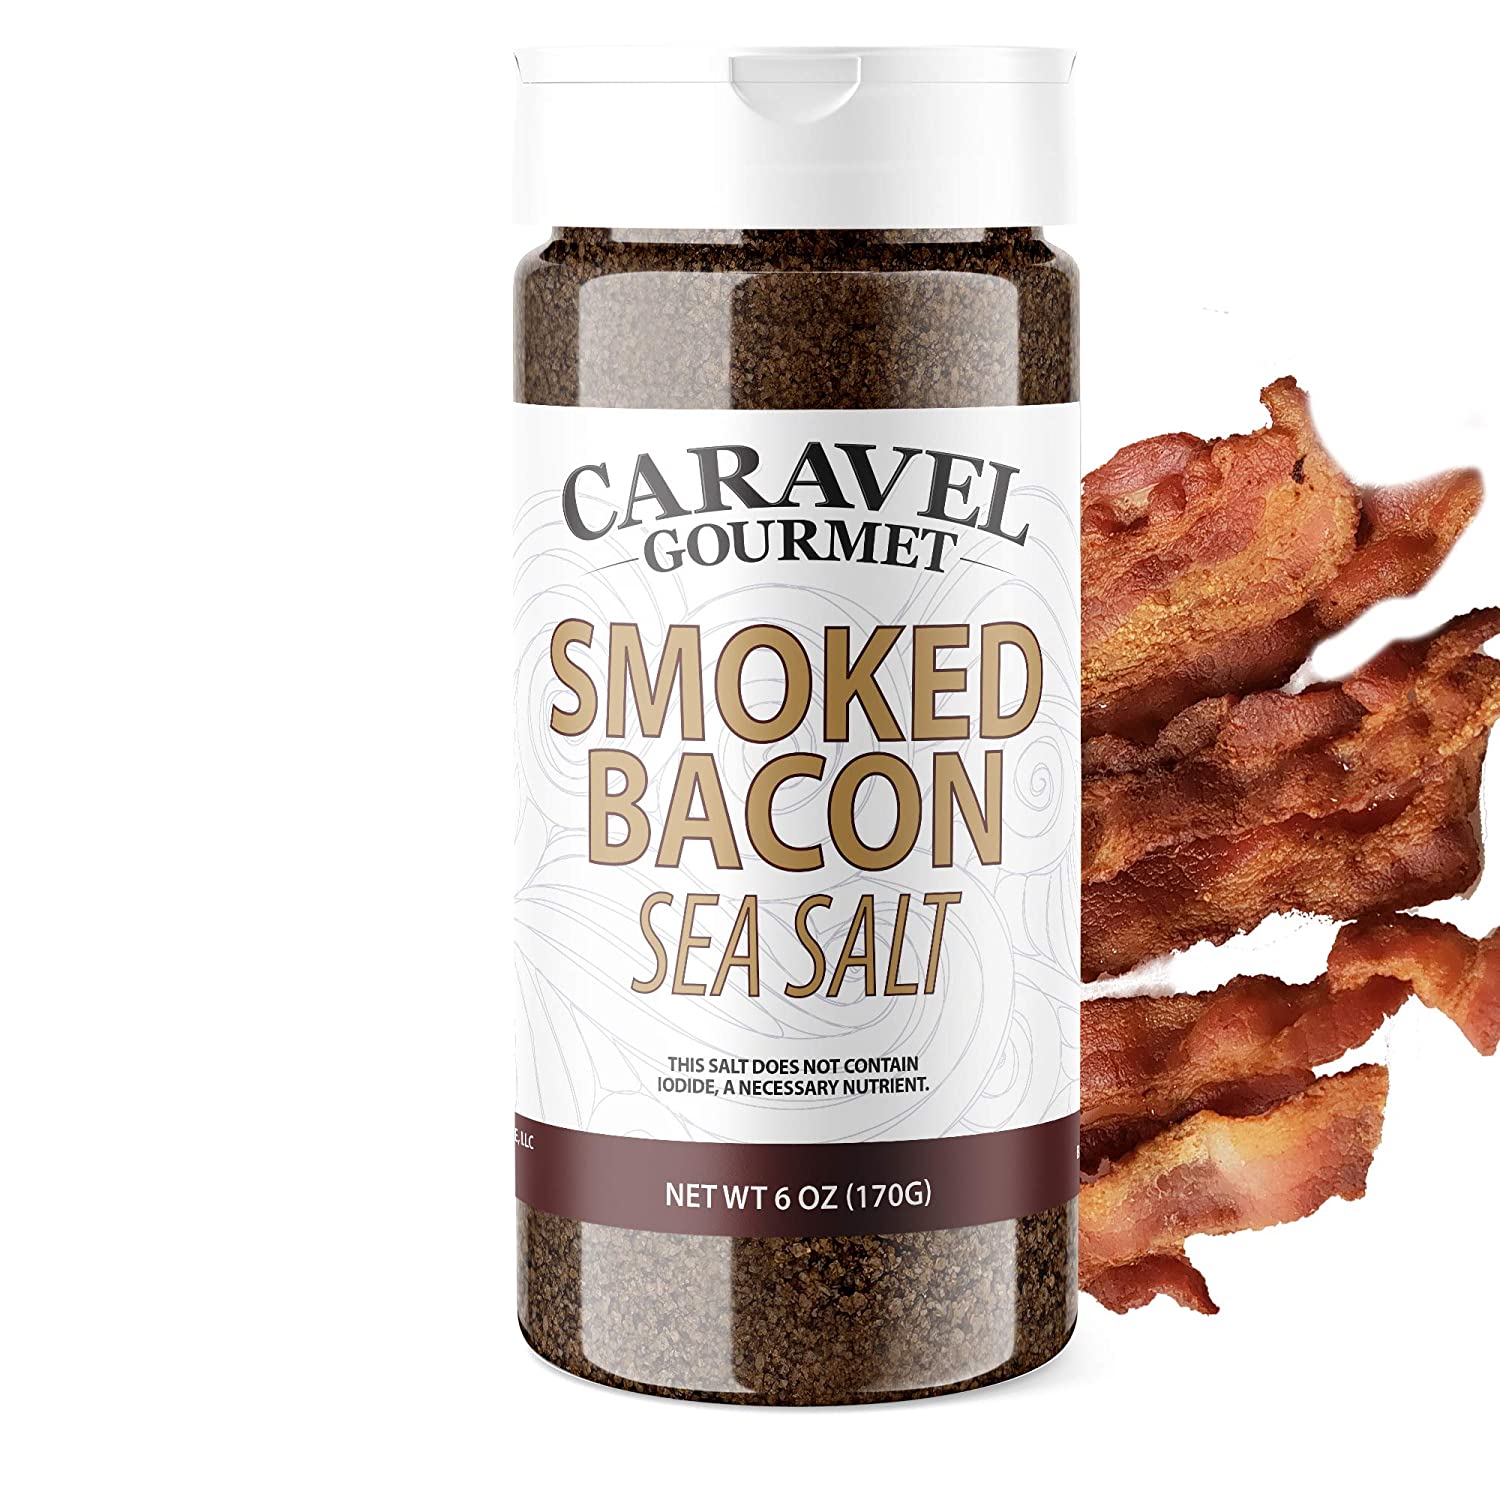 Smoked Bacon Sea Salt Shaker - All Natural Seasoning Salt for Po